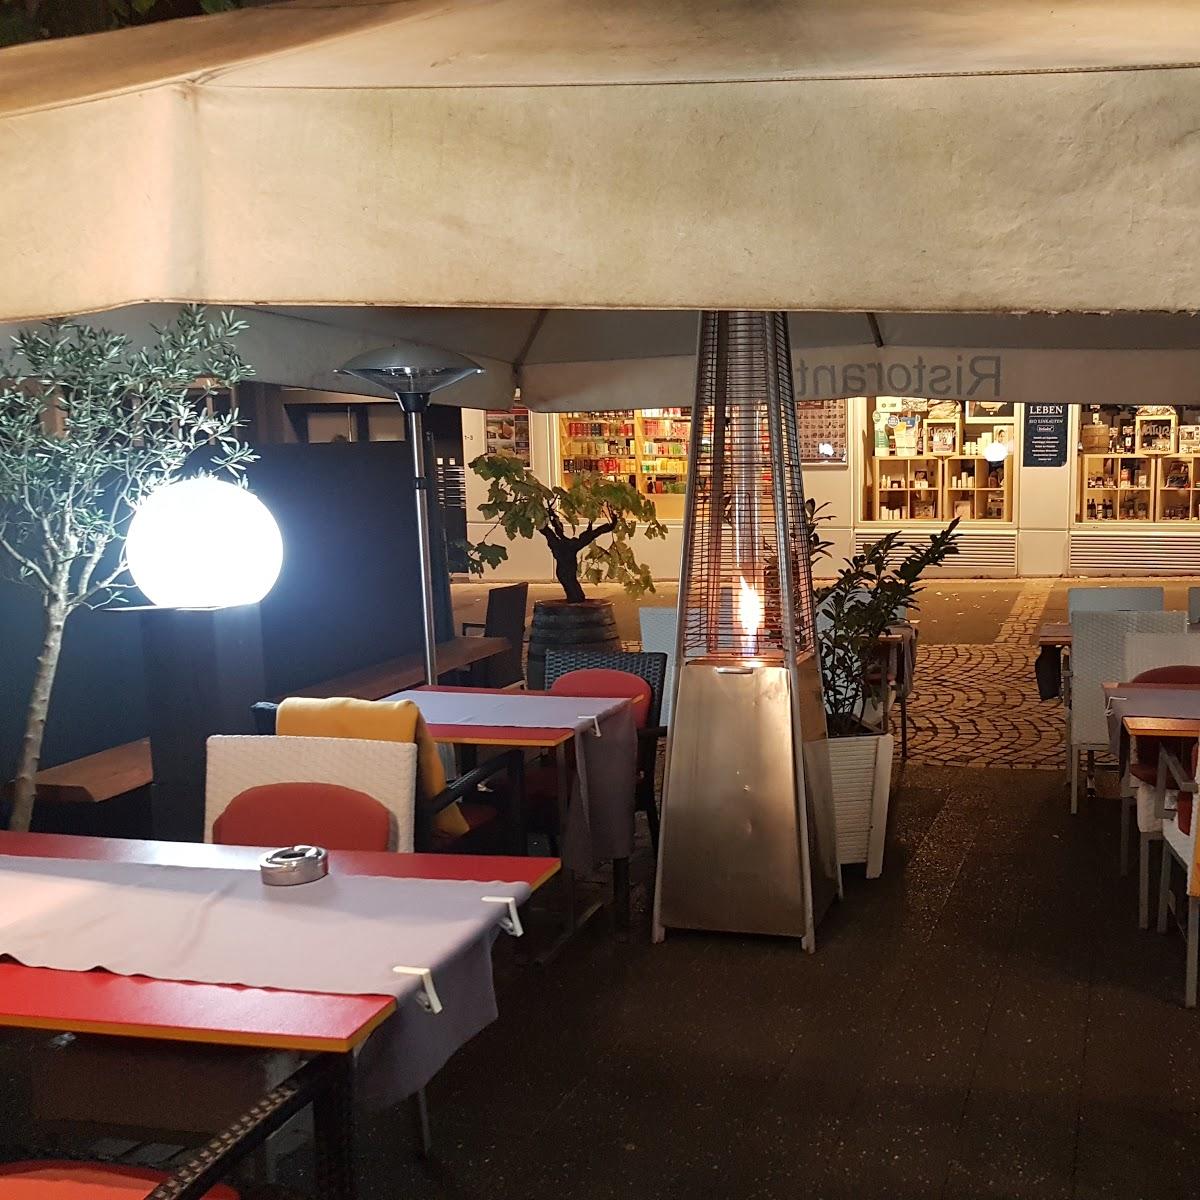 Restaurant "Calabria" in Siegburg